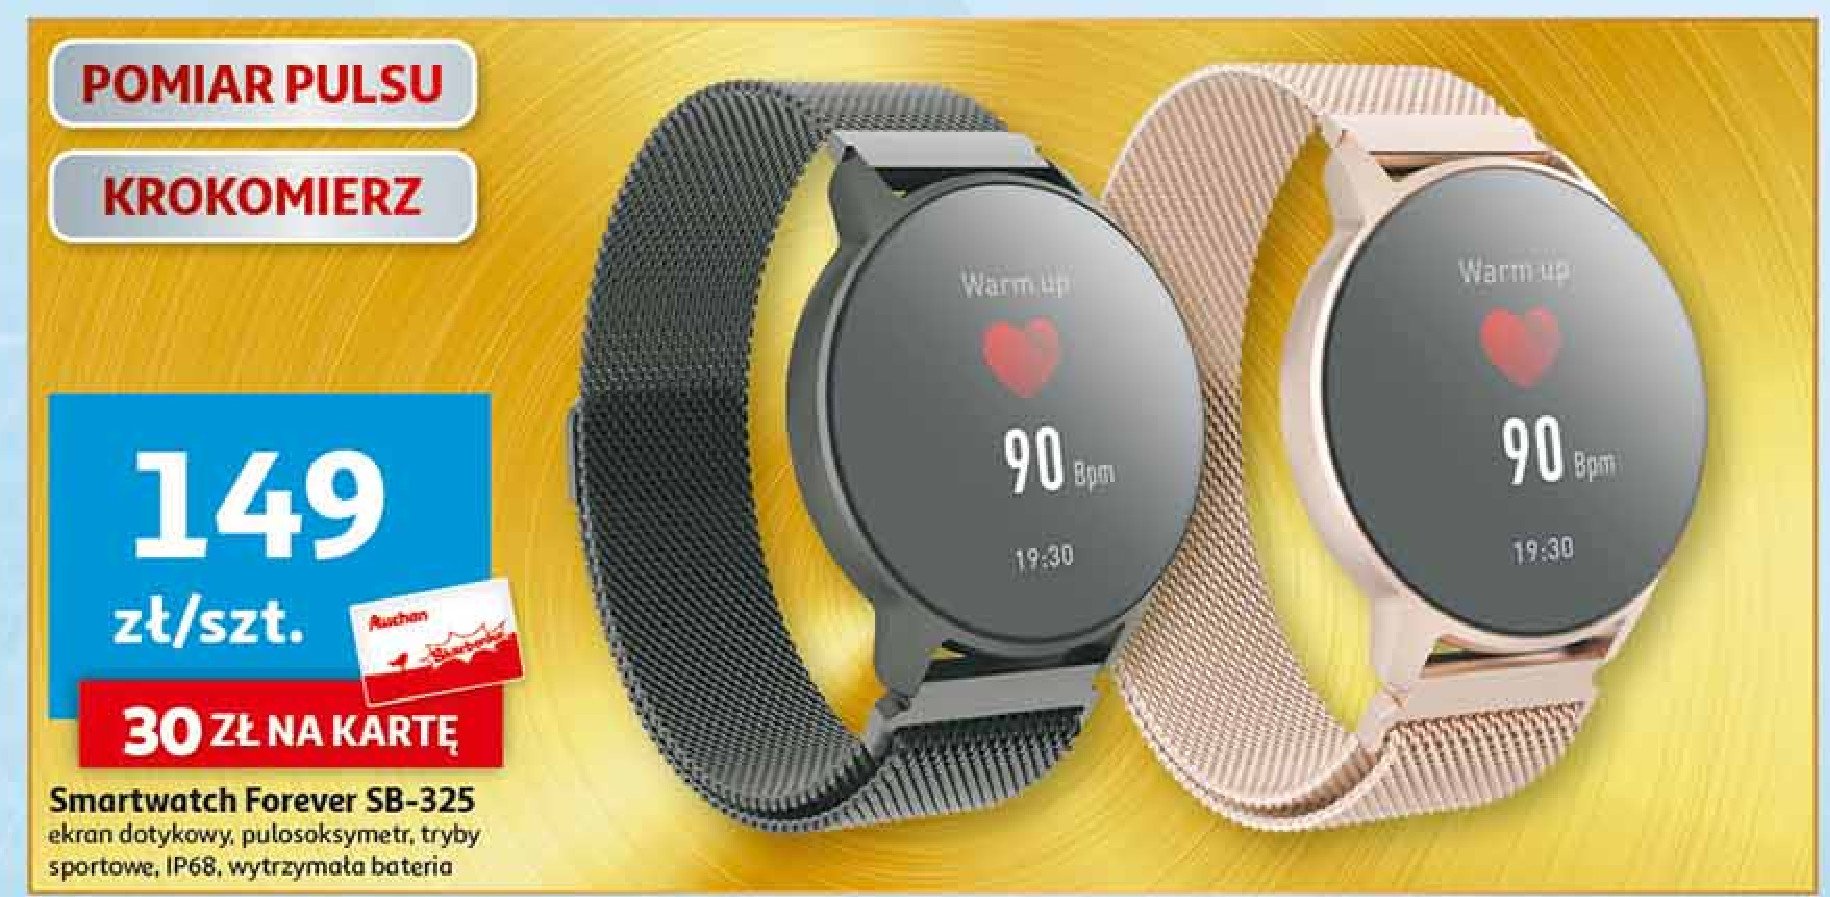 Smartwatch fore vive sb-325 różowo złoty Forever promocja